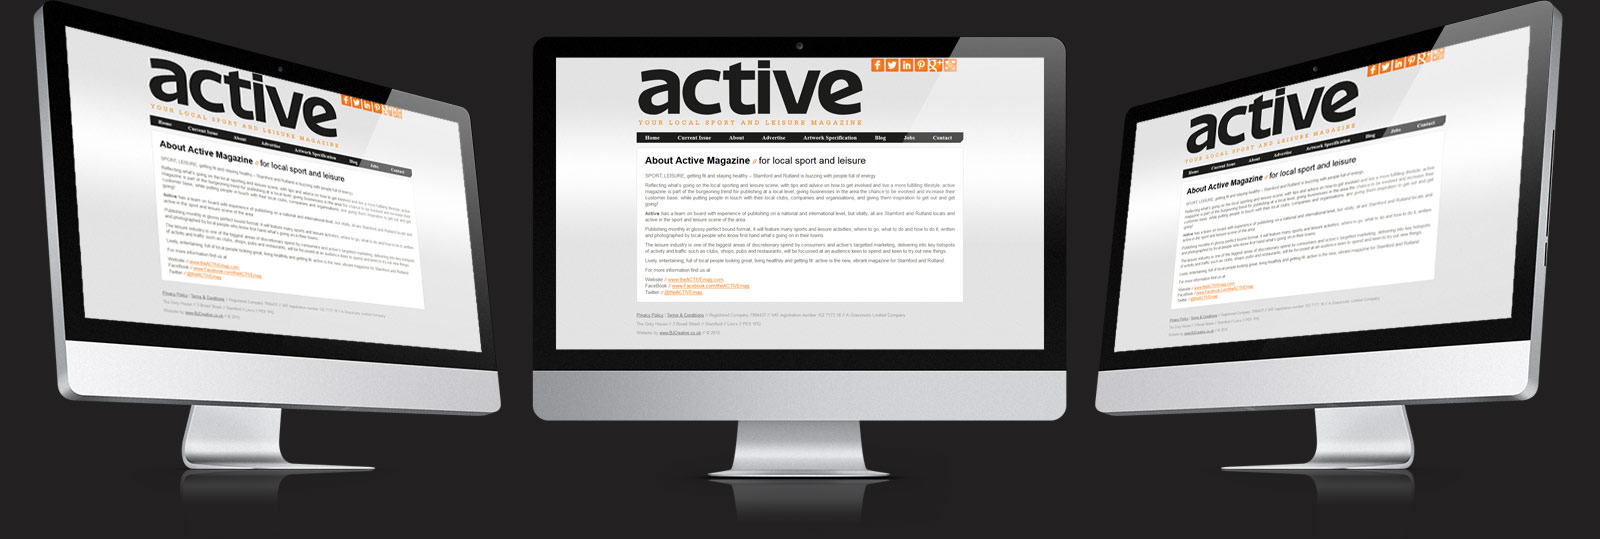 Stamford Web Design - The Active Magazine2